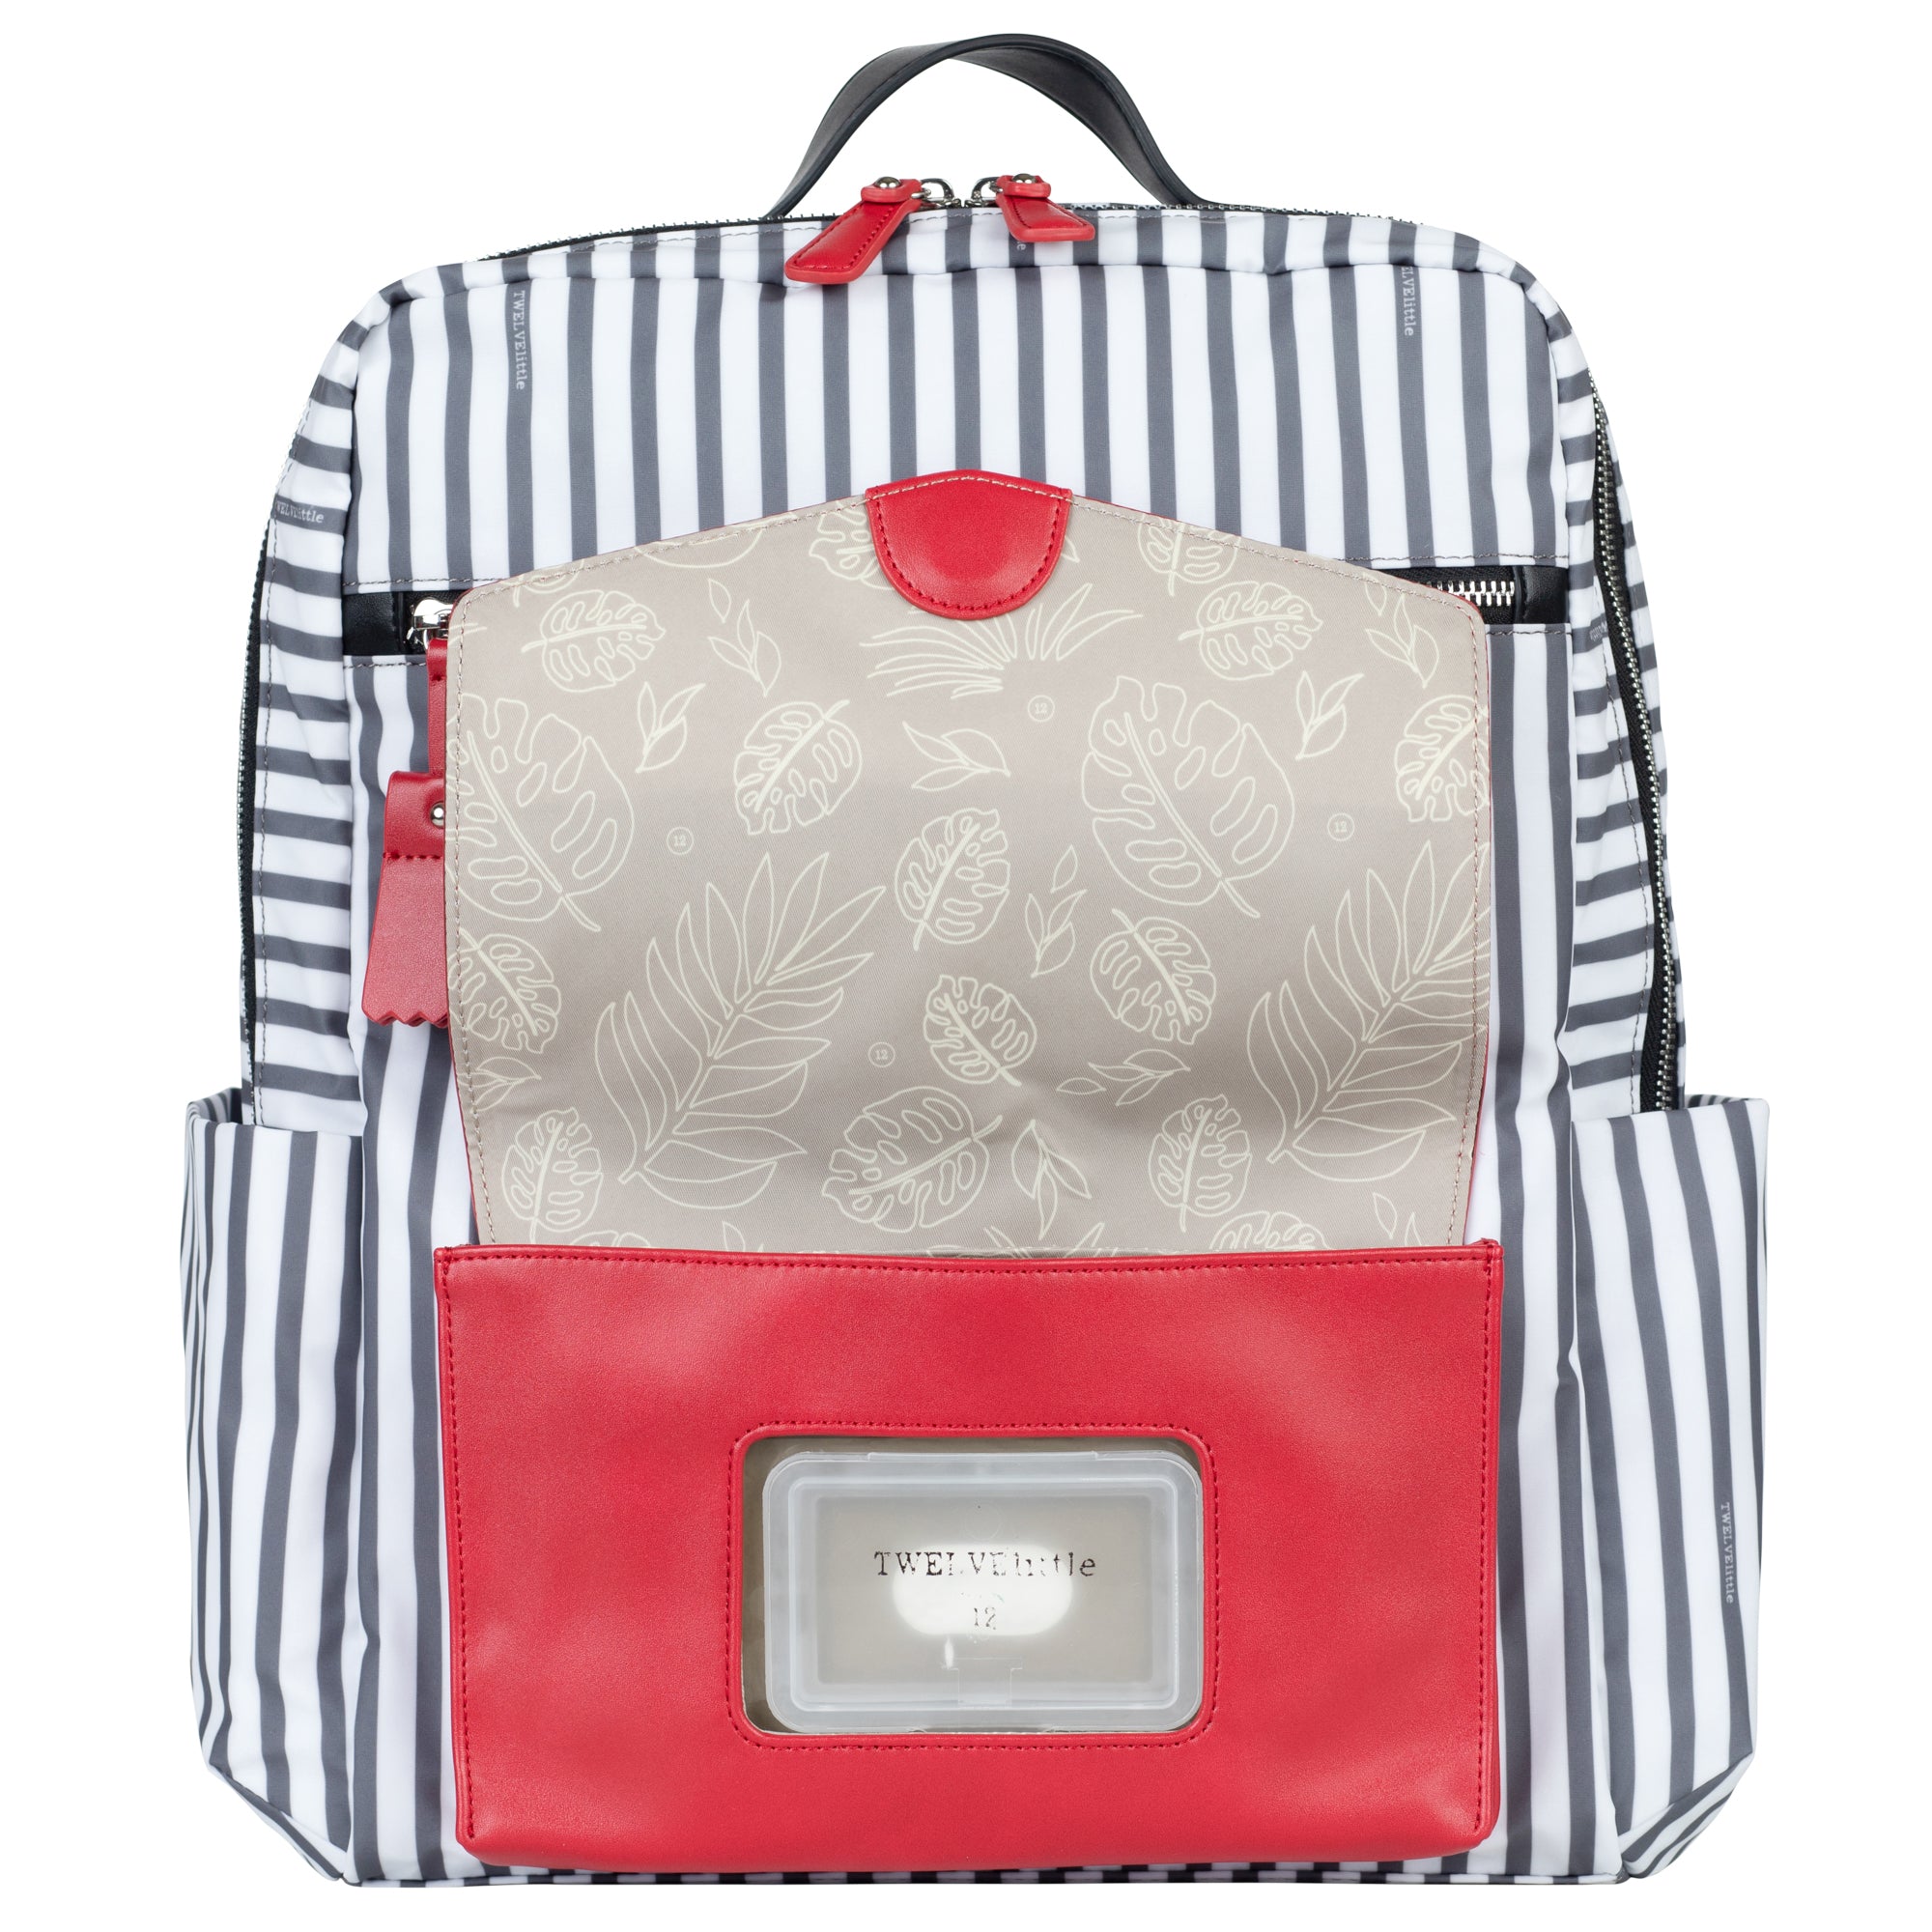 Peek-a-Boo Backpack Diaper Bag - Stripe – Project Nursery